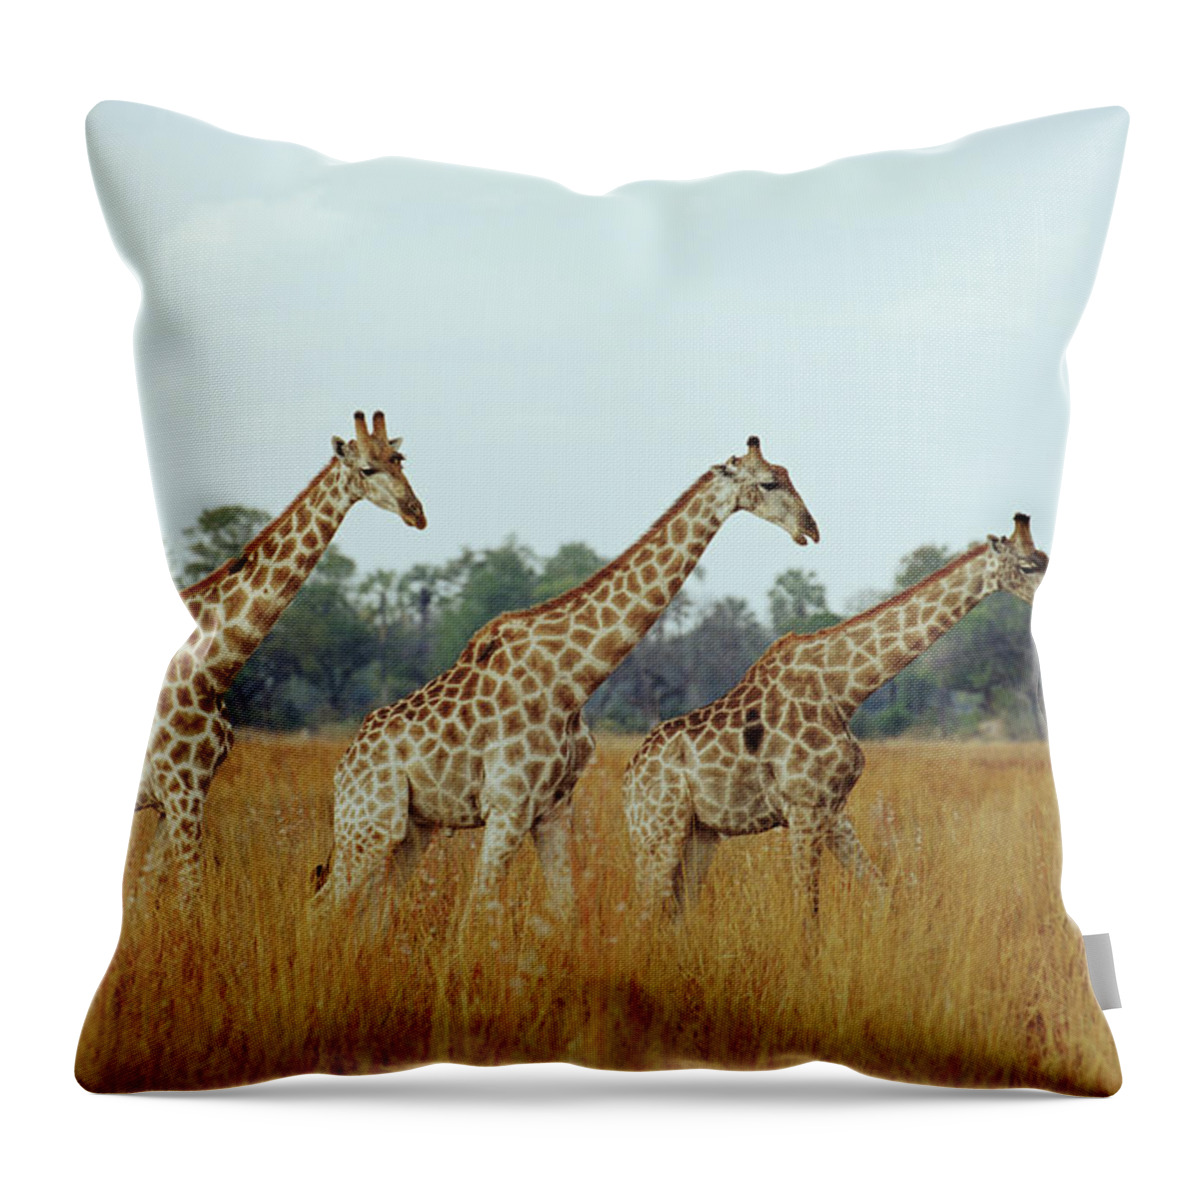 Horned Throw Pillow featuring the photograph Giraffe Herd, Botswana by Tim Graham